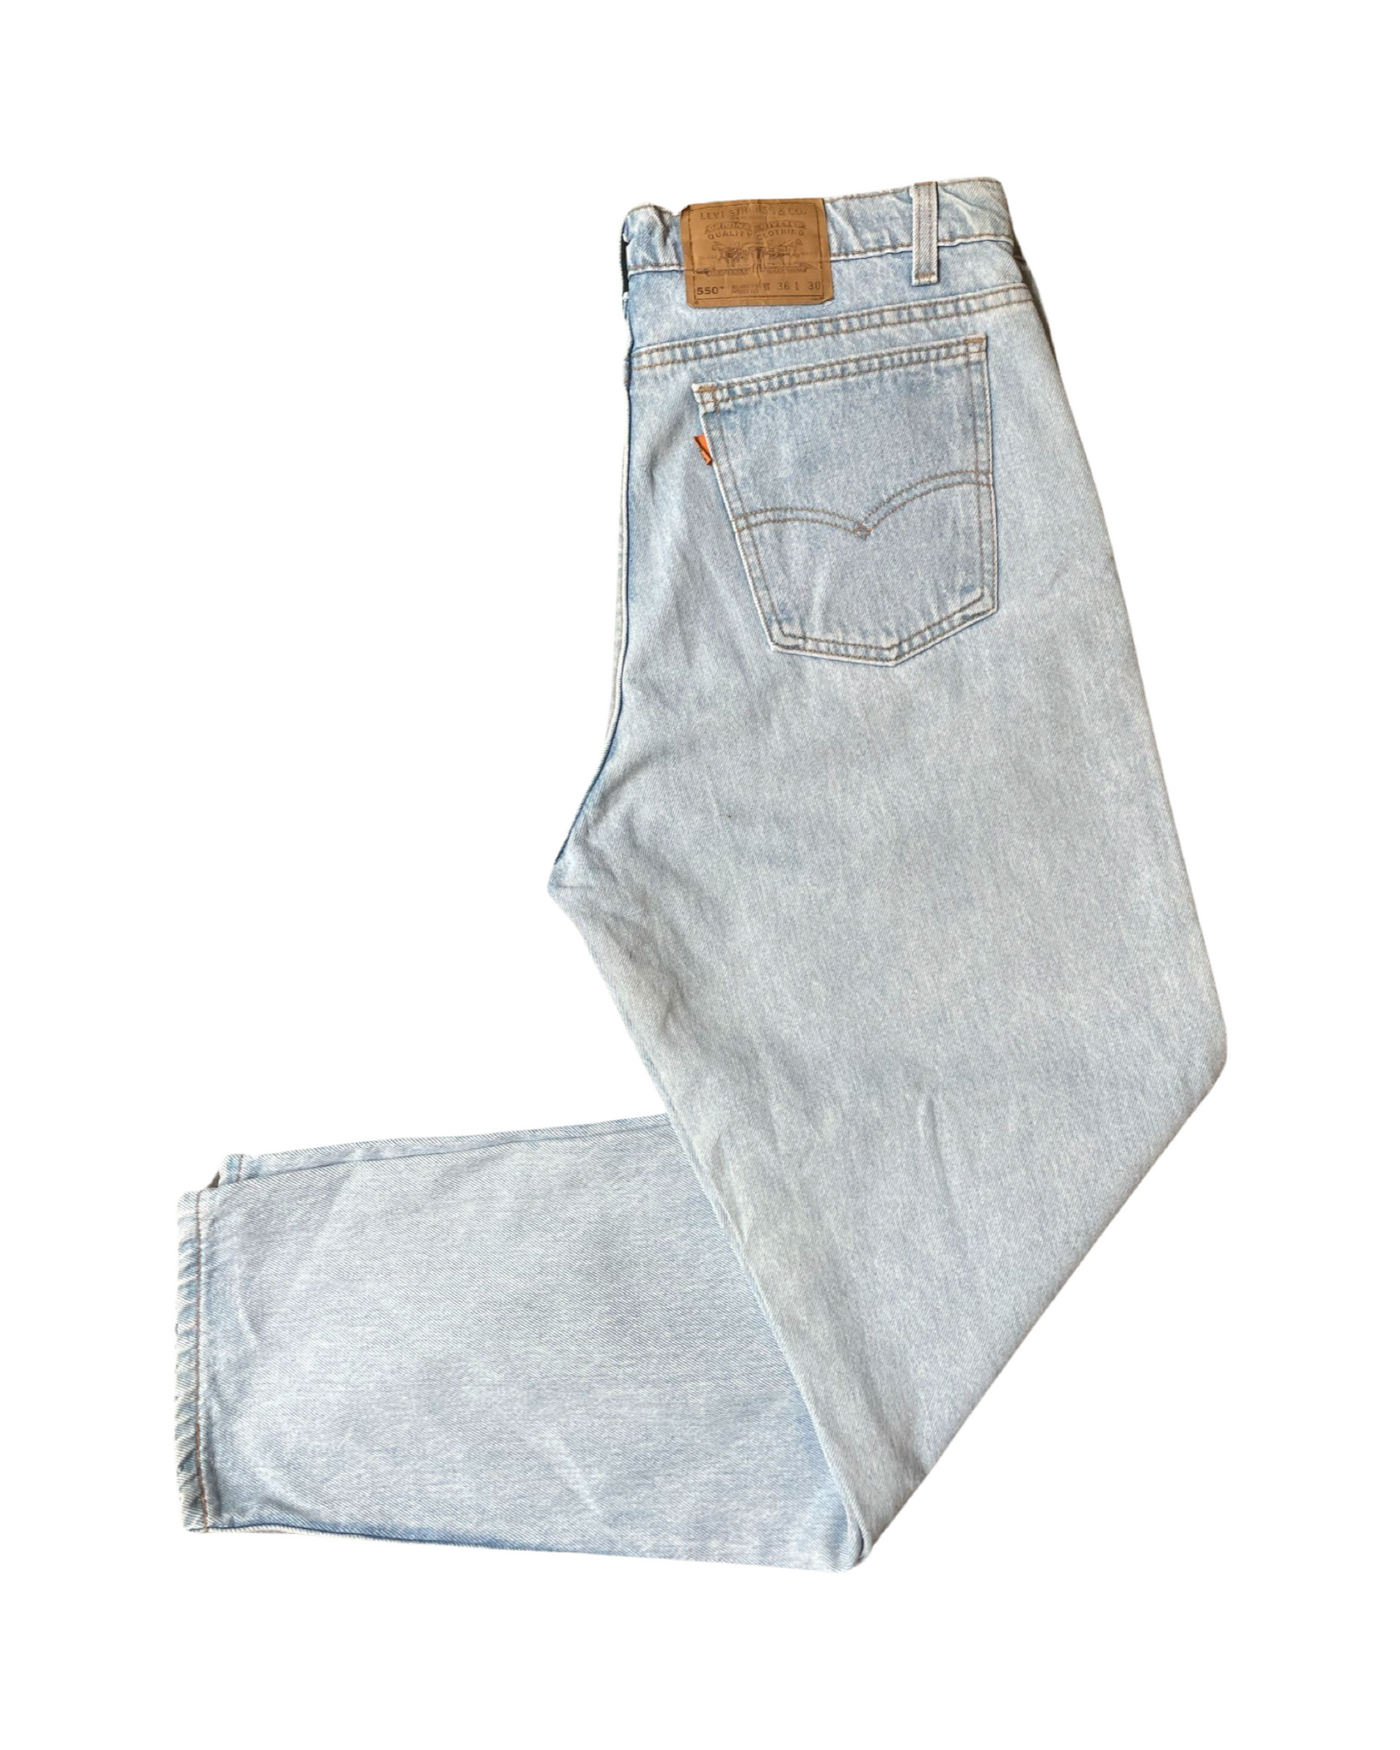 Vintage Levi 550 Jean